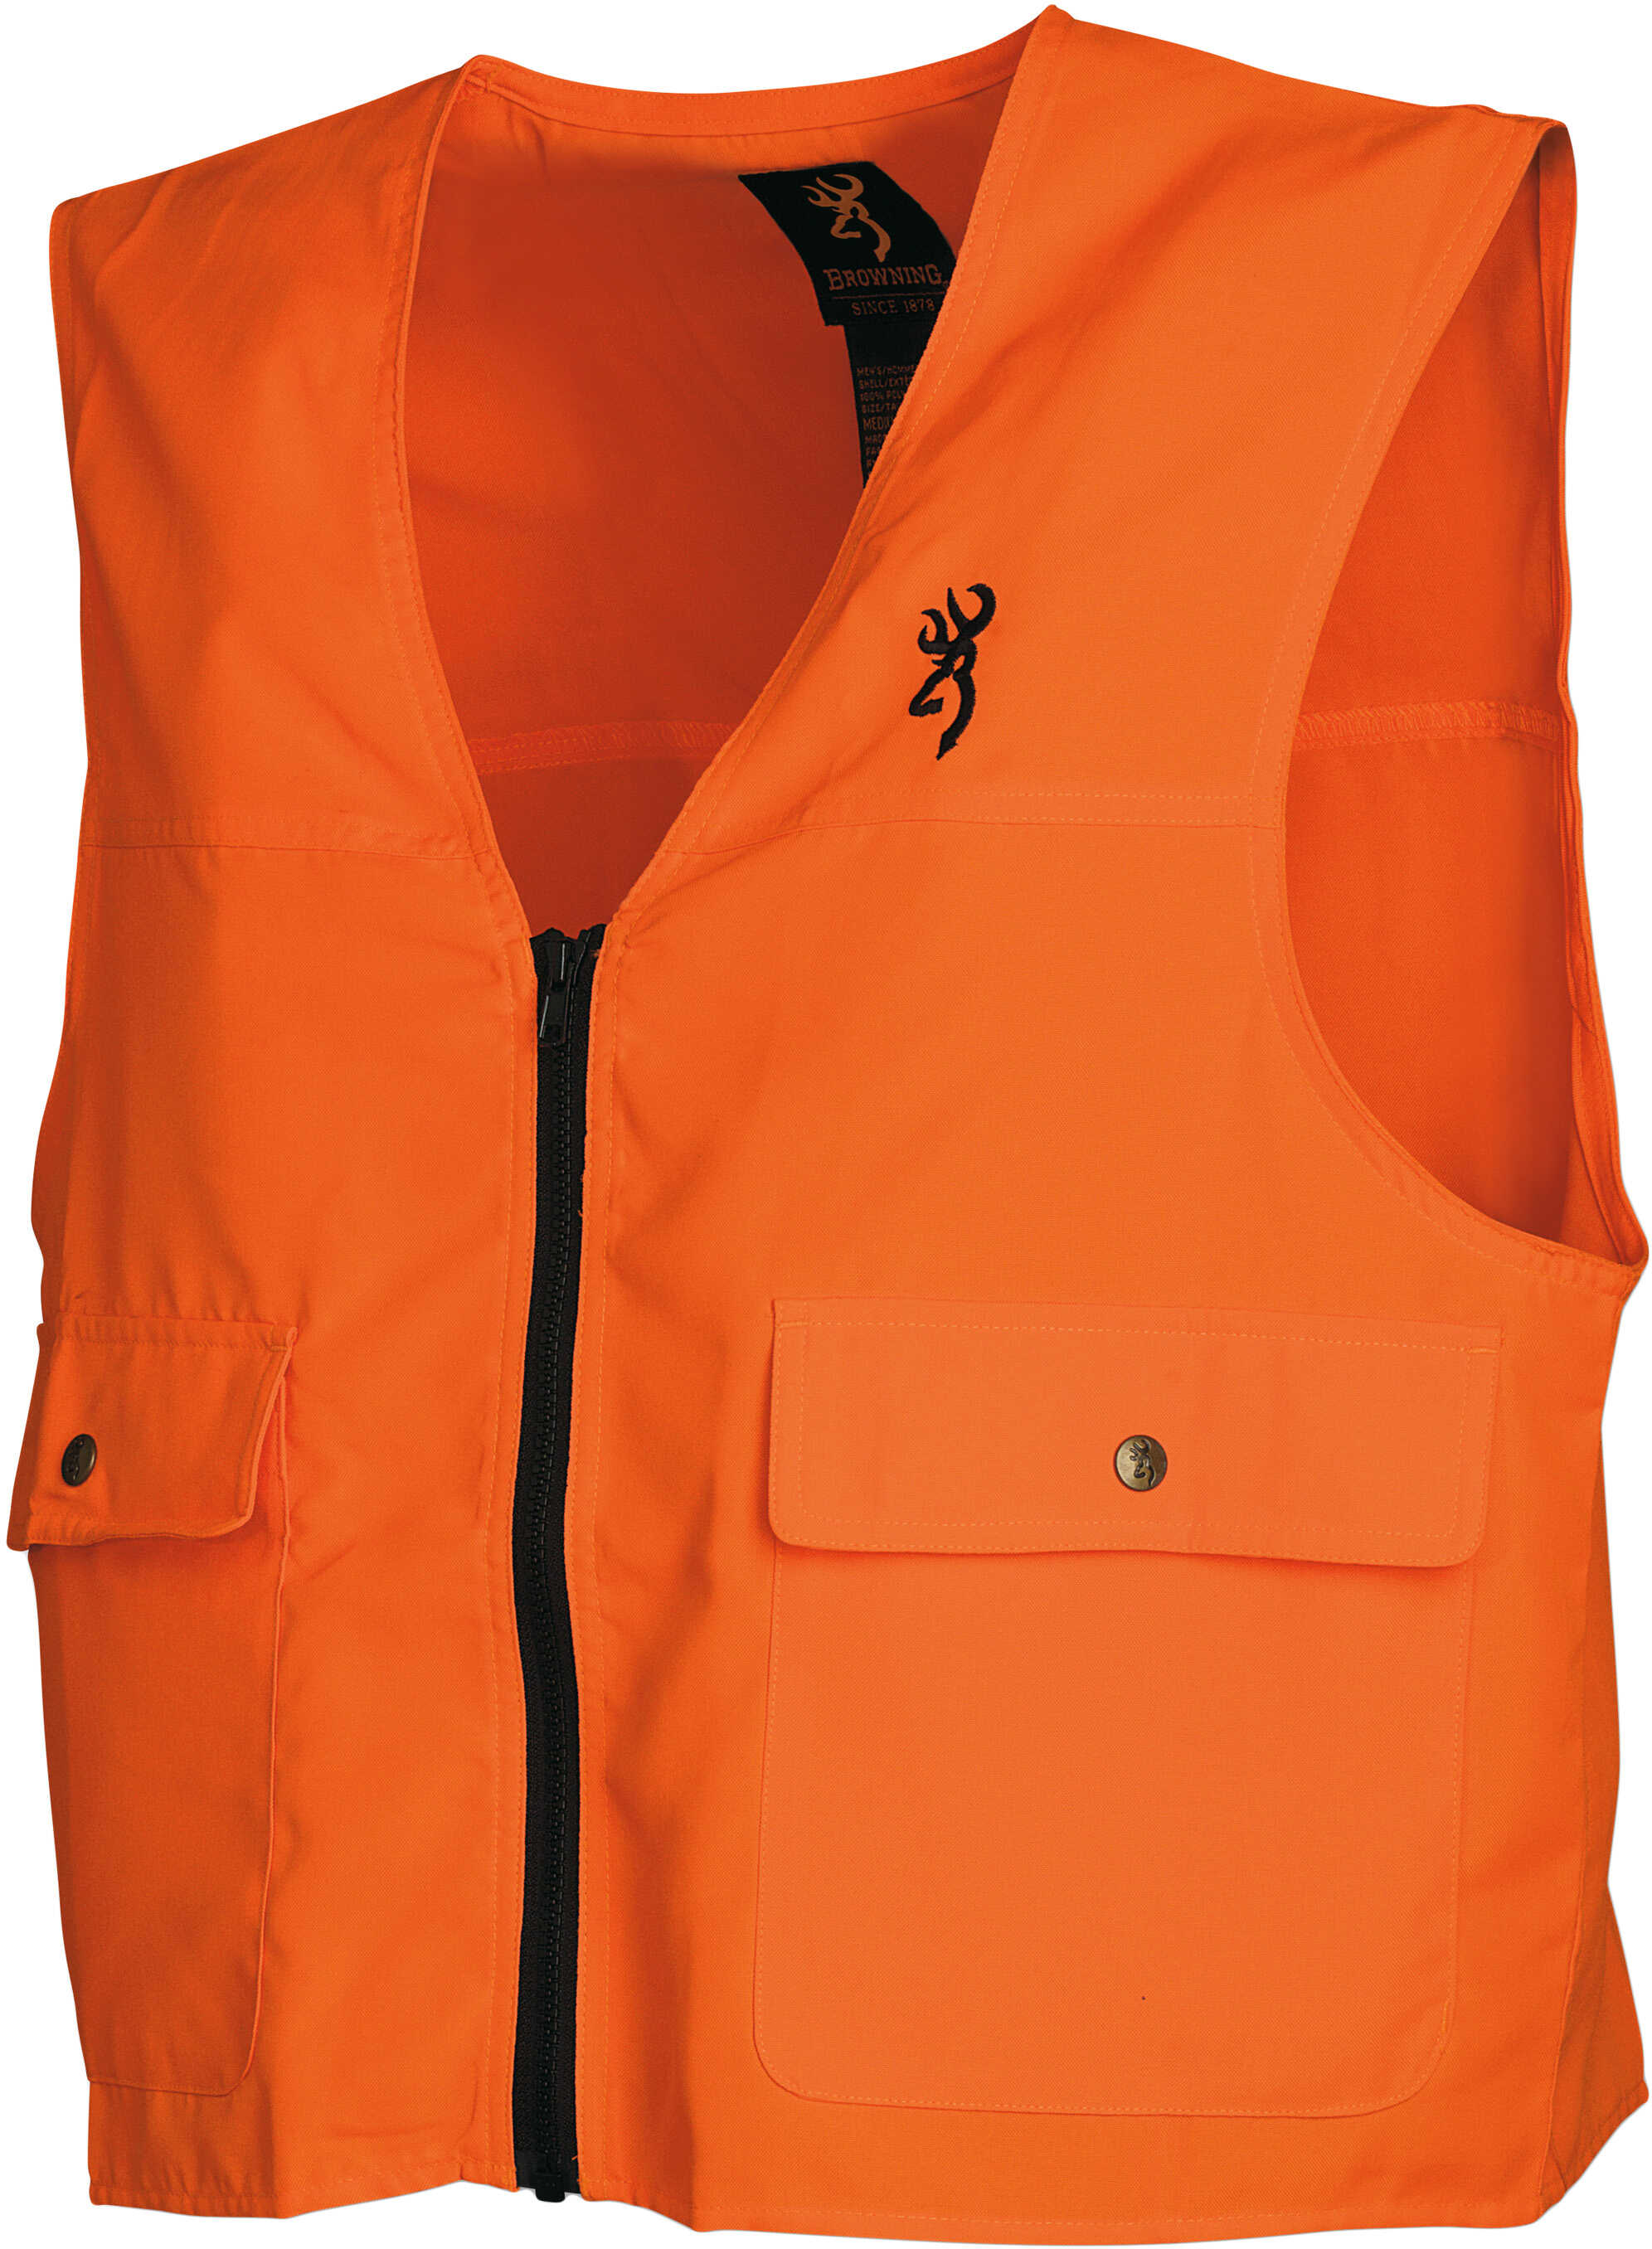 Browning Safety Vest Blaze Orange Small Model: 3051000101